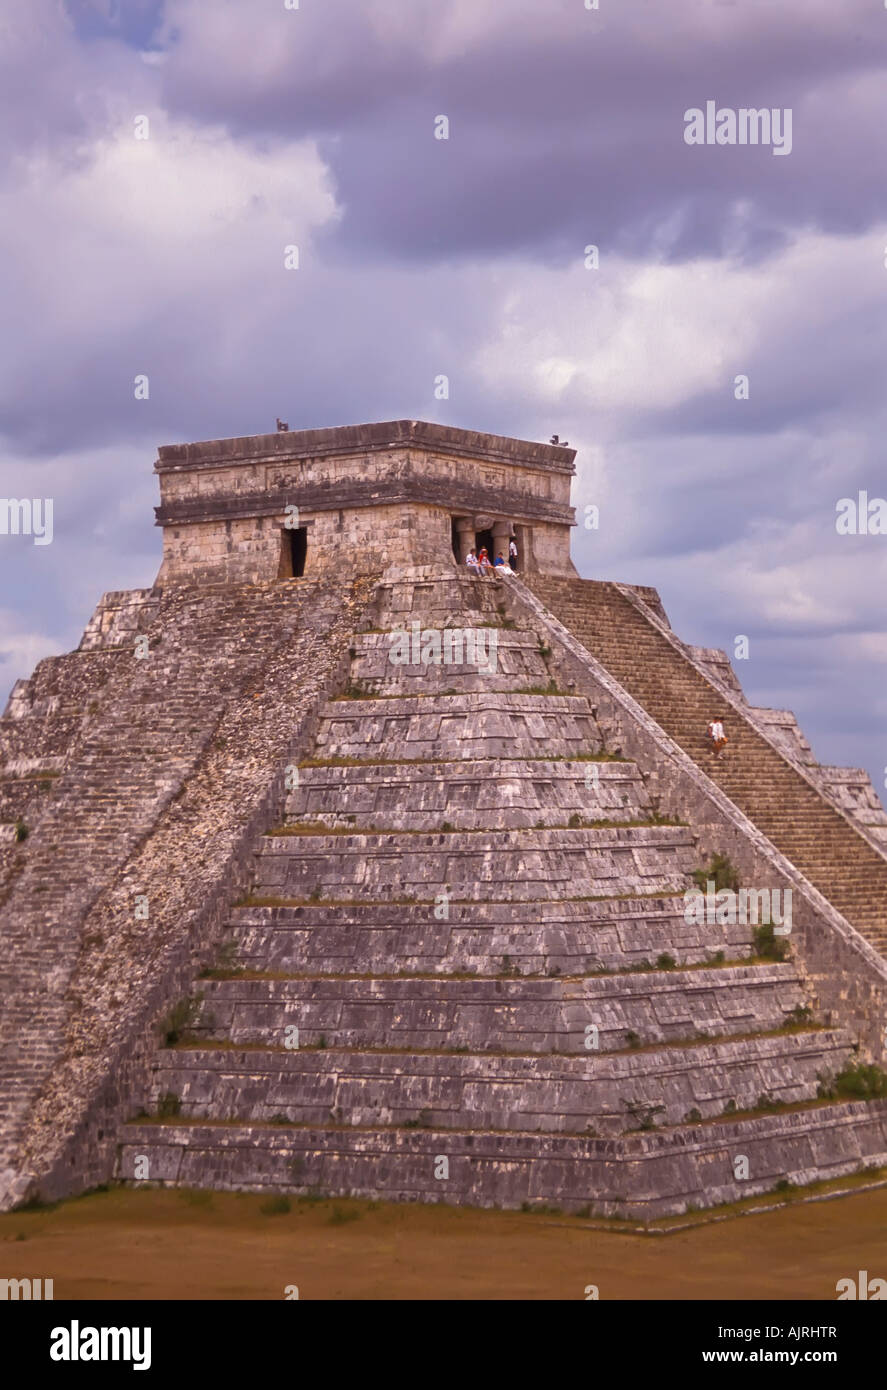 Le château d'El Castillo pyramide temple Chichen Itza Yucatan Mexique, mx, célèbre site immobilier symbole Mexicain ruine maya maya Banque D'Images